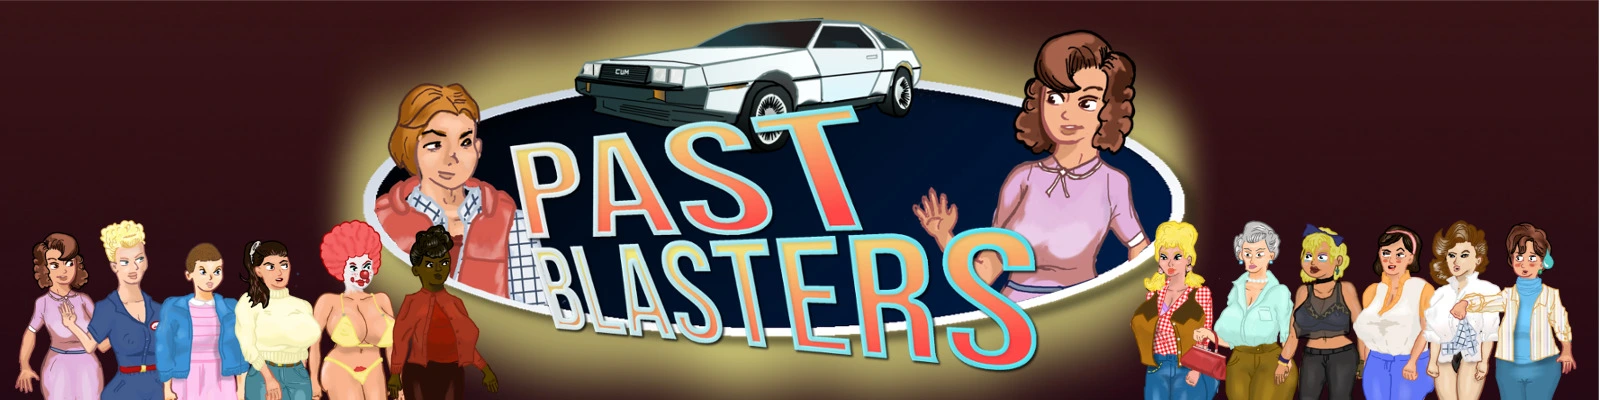 Past Blasters [v0.1] main image